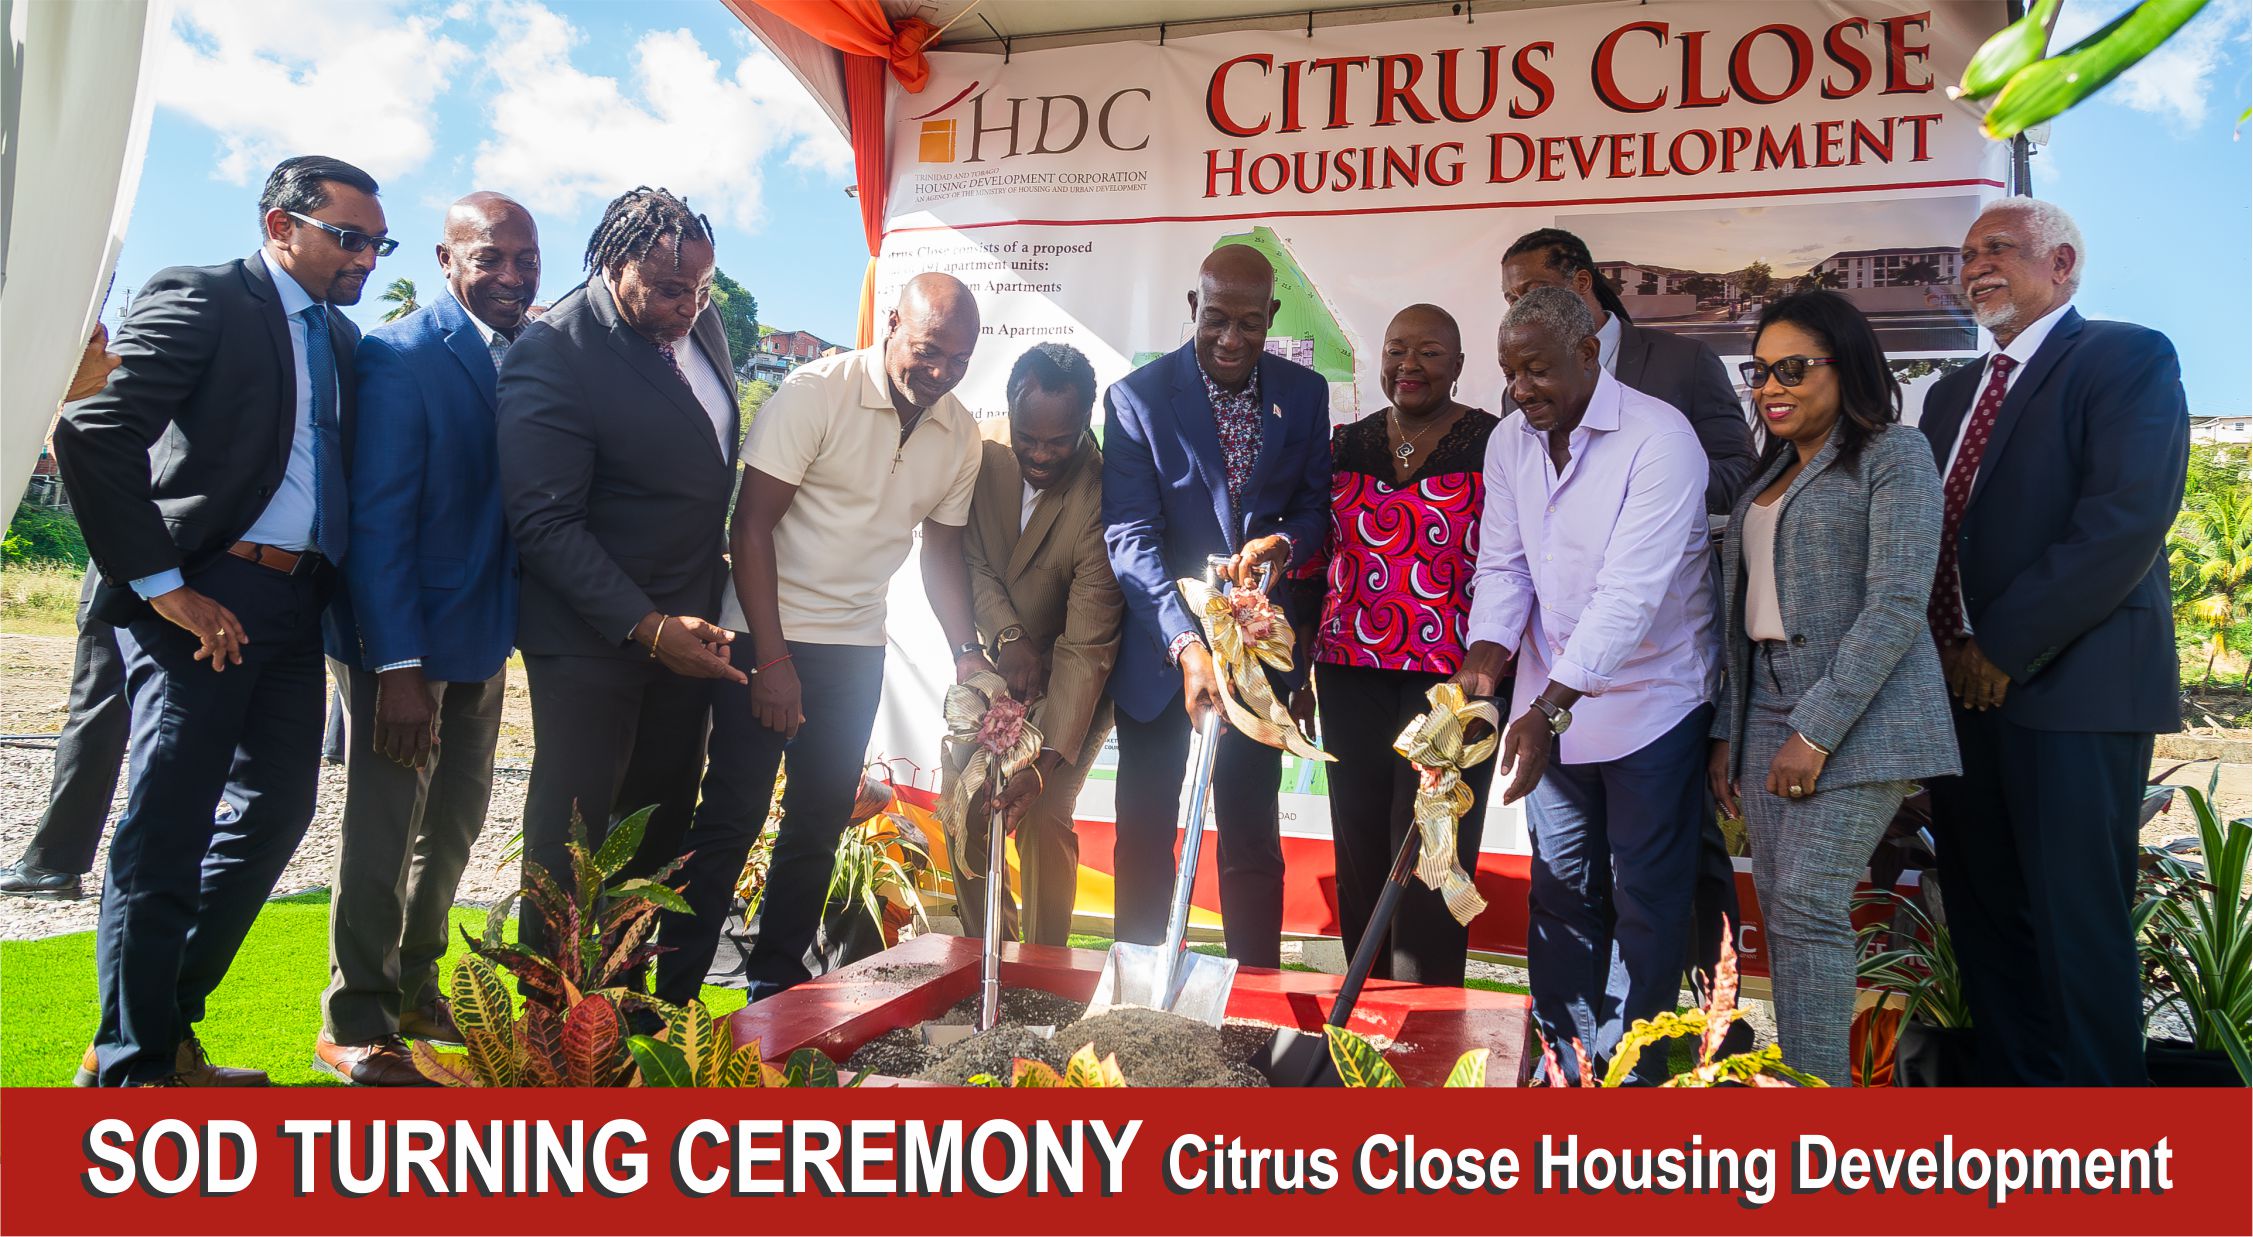 HDC SOD Turning Ceremony: Citrus Close Housing Development